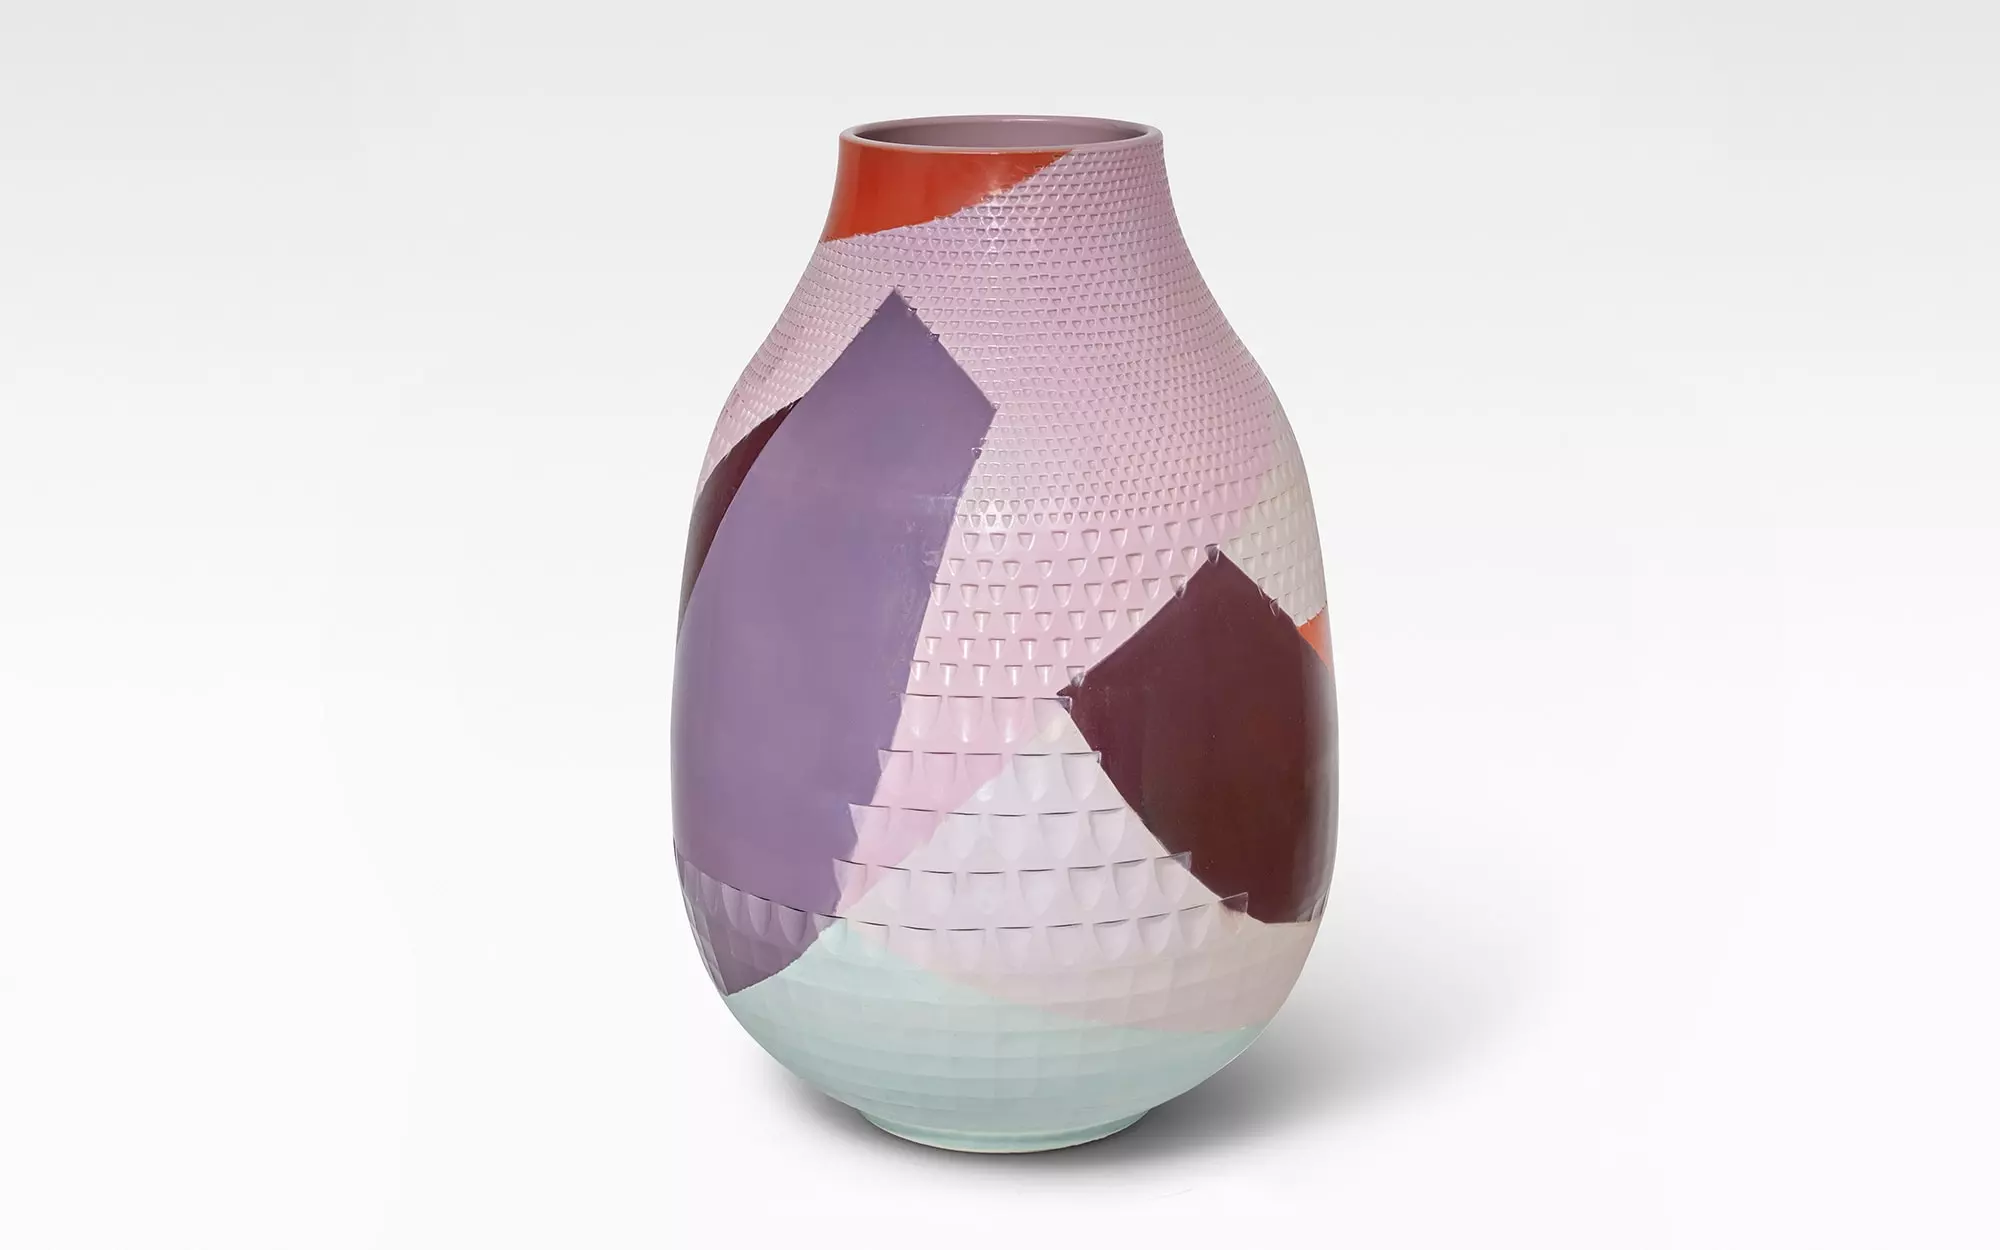 Diamond Vase - Day - Hella Jongerius - Lucas Ratton x kamel mennour x Galerie kreo x Jacques Lacoste @Saint-Tropez.